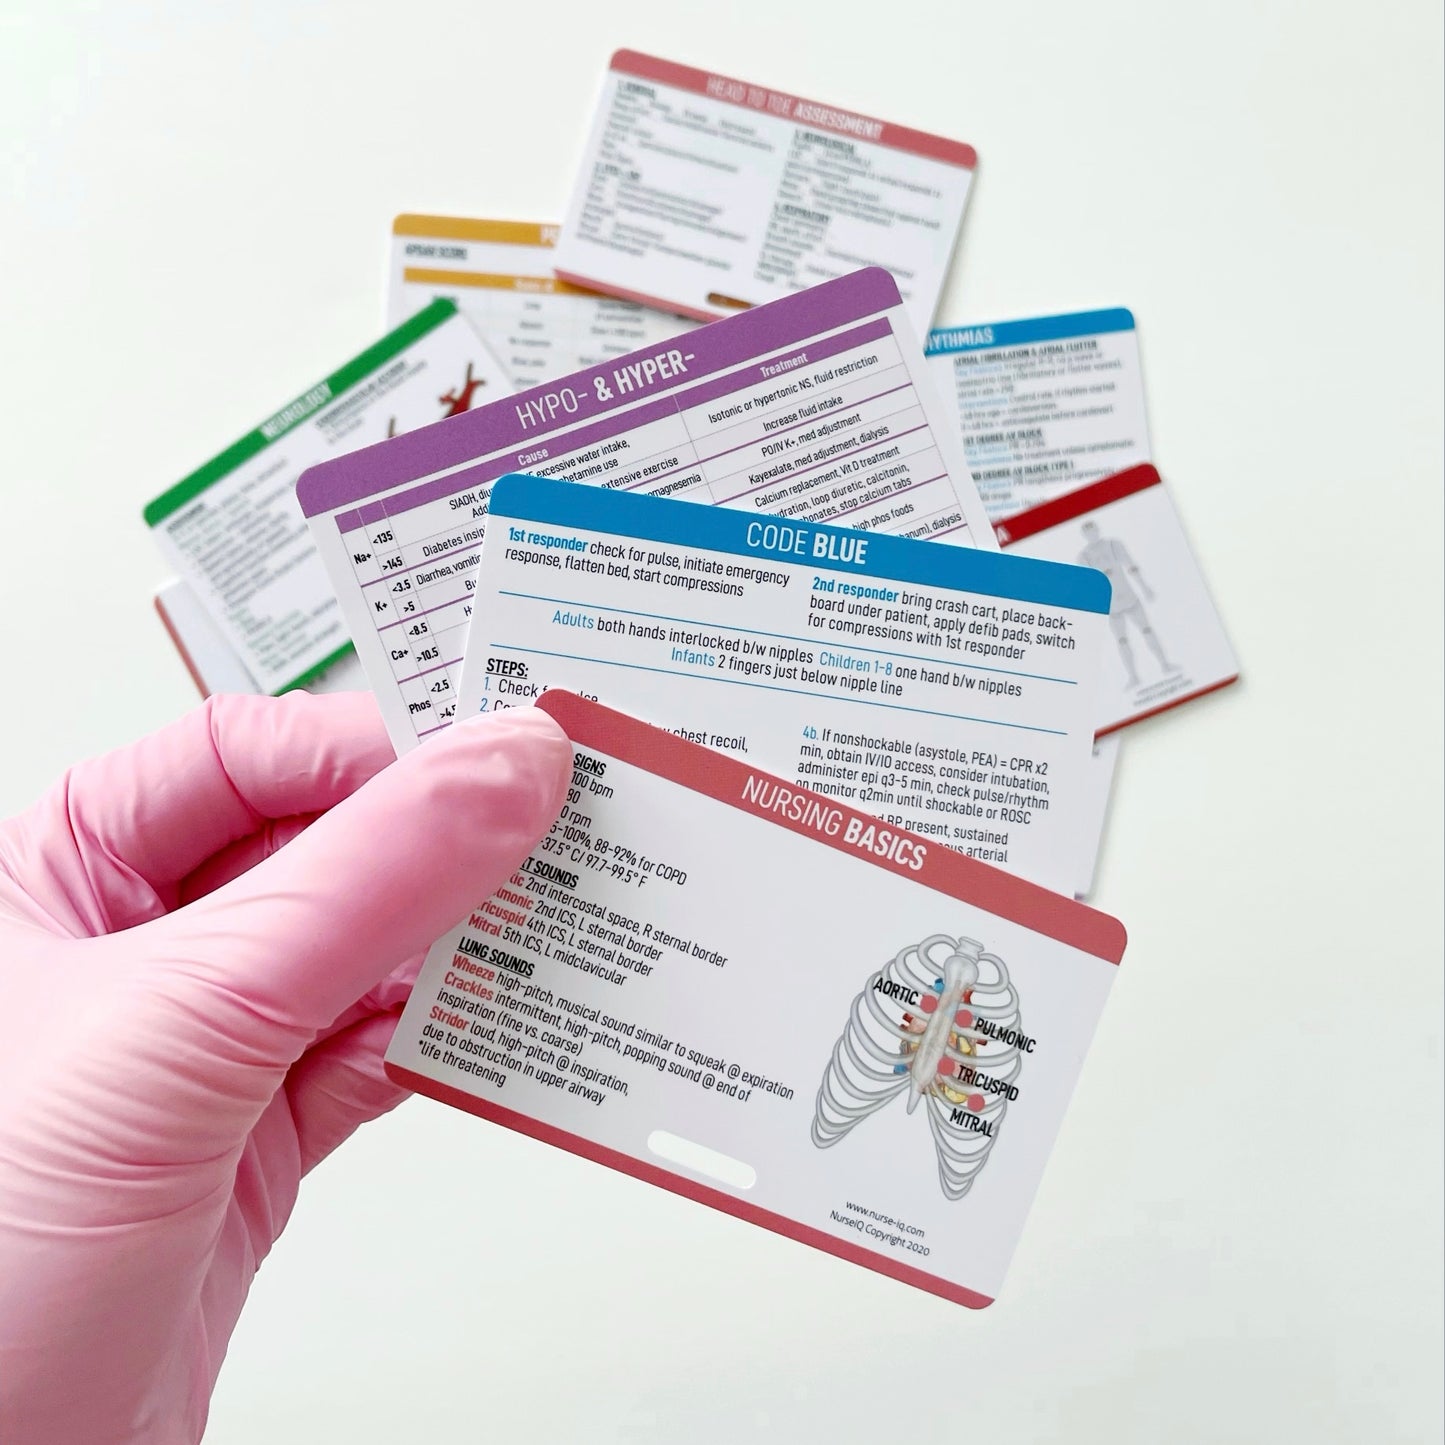 Head-to-toe Assessment Nursing Reference Card, Badge Card, Nursing